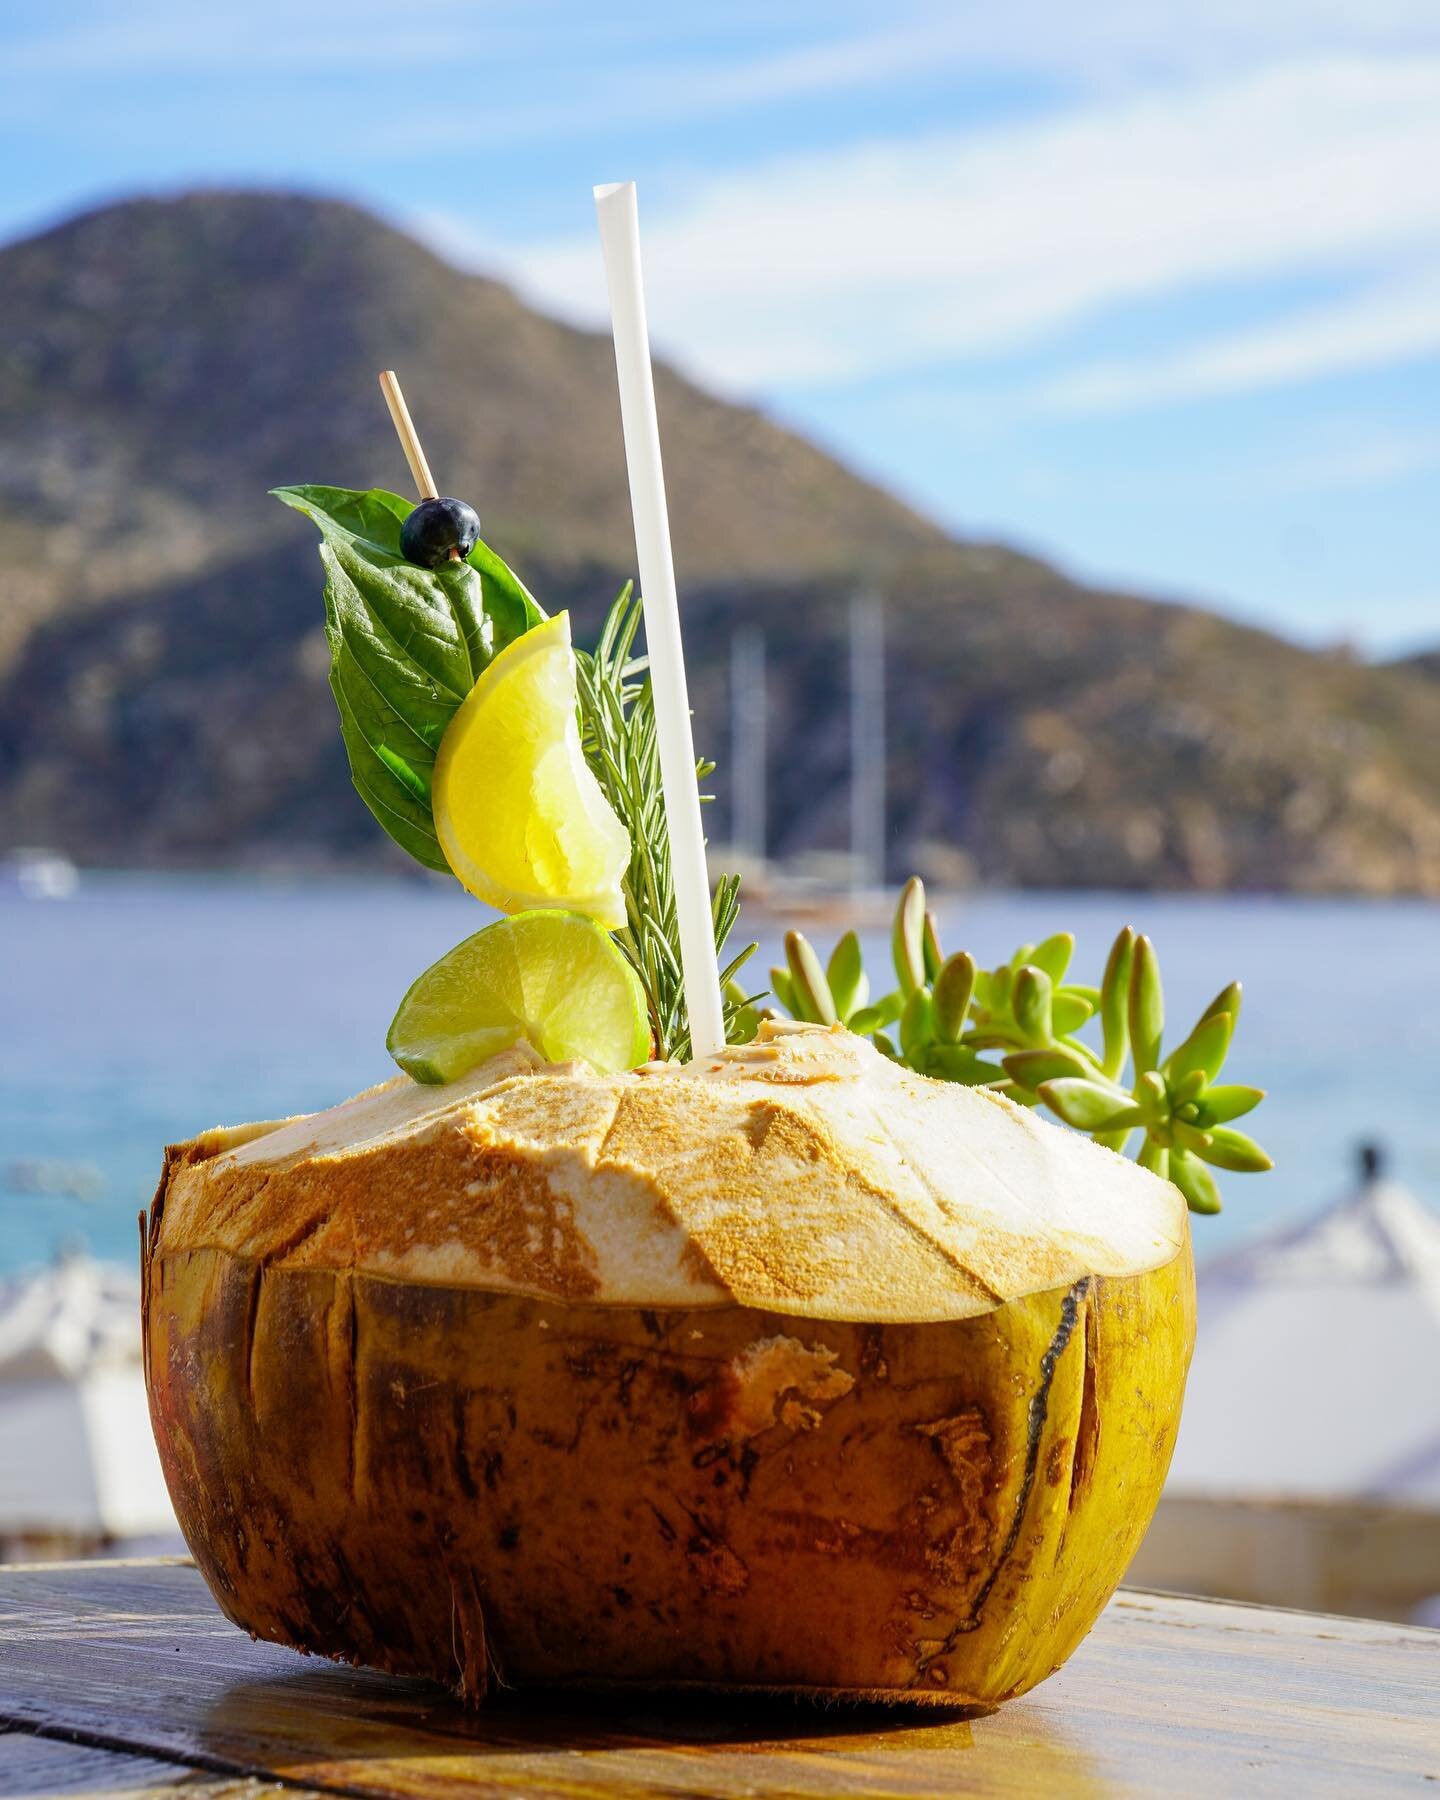 Happiness is drinking straight from the coconut. 🥥 

Felicidad es beber directamente del coco. 🤤 #milkybeachcabo 

#goodvibesonly #goodvibes #vibes #seaview #seavibes #beachvibes #beachday #beachlife #coconut #coconutwater #playa #solplayayarena #c